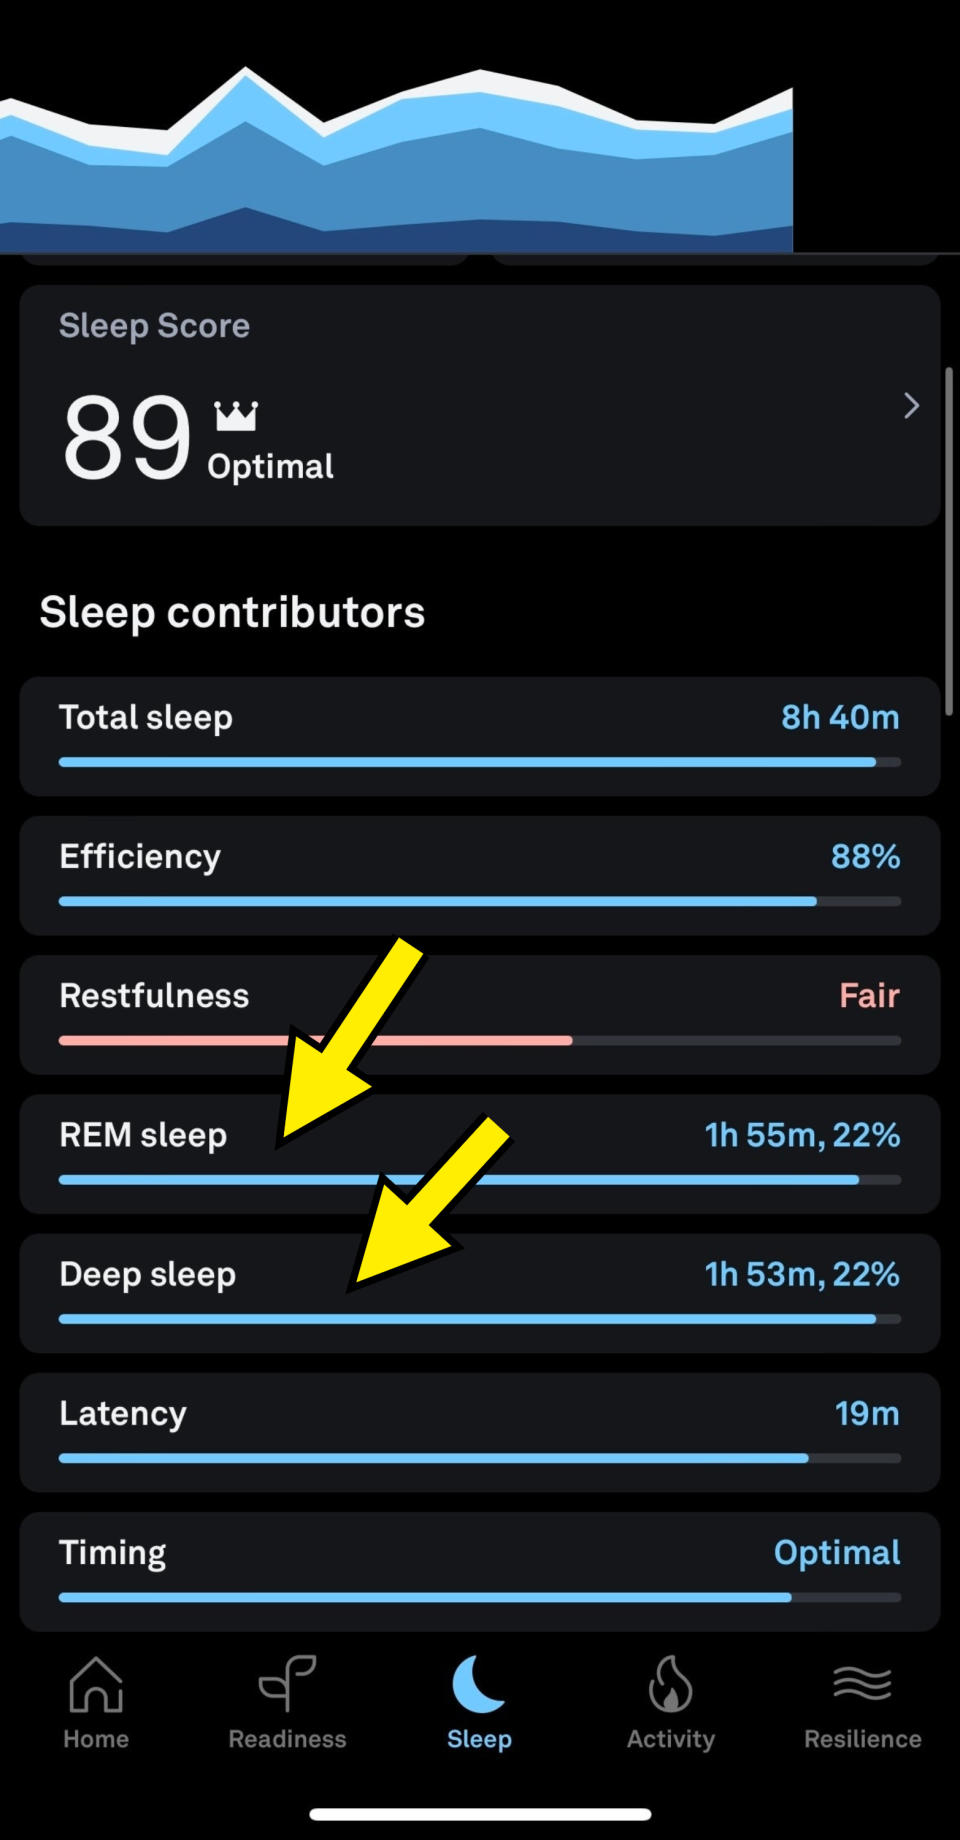 Sleep tracking app screenshot showing Sleep Score of 89 and various sleep metrics like duration, restfulness, REM sleep, latency